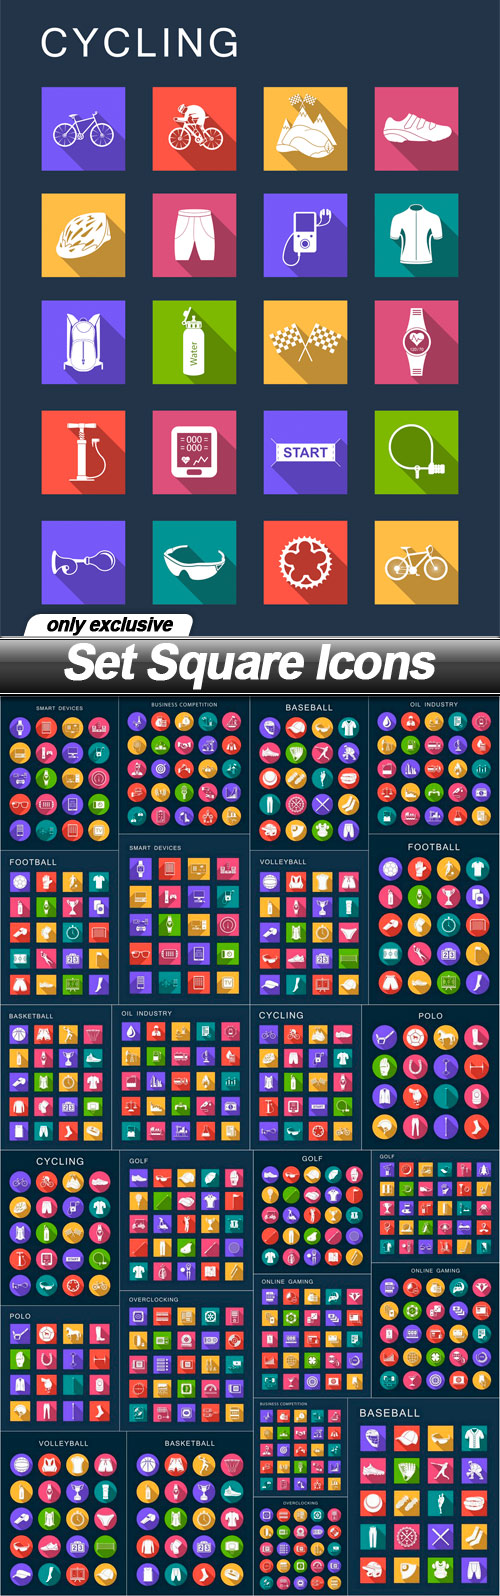 Set Square Icons - 25 EPS